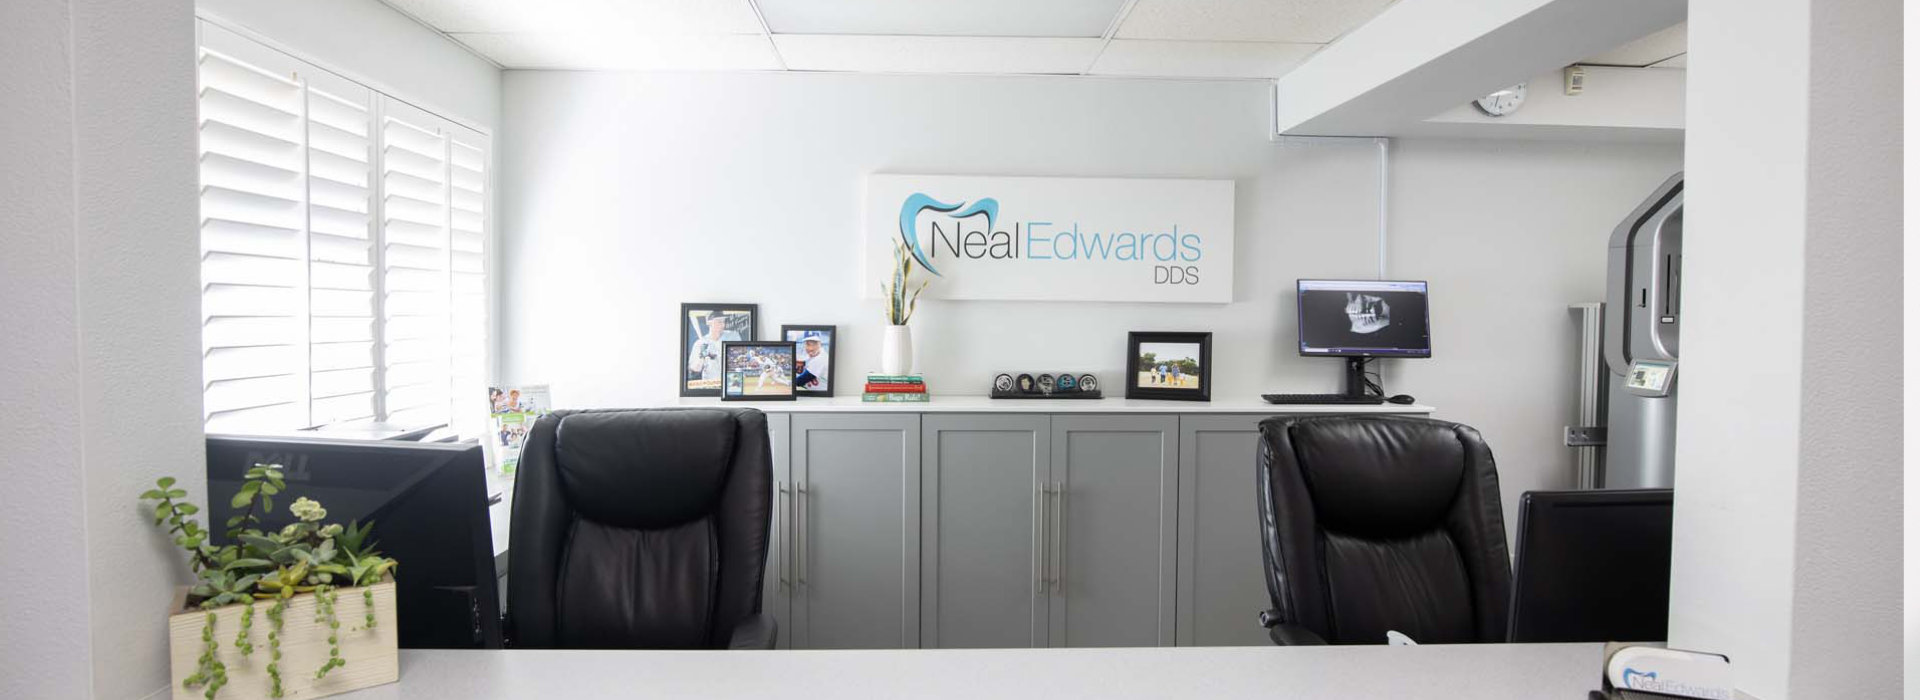 Front Desk of Neal Edwards DDS